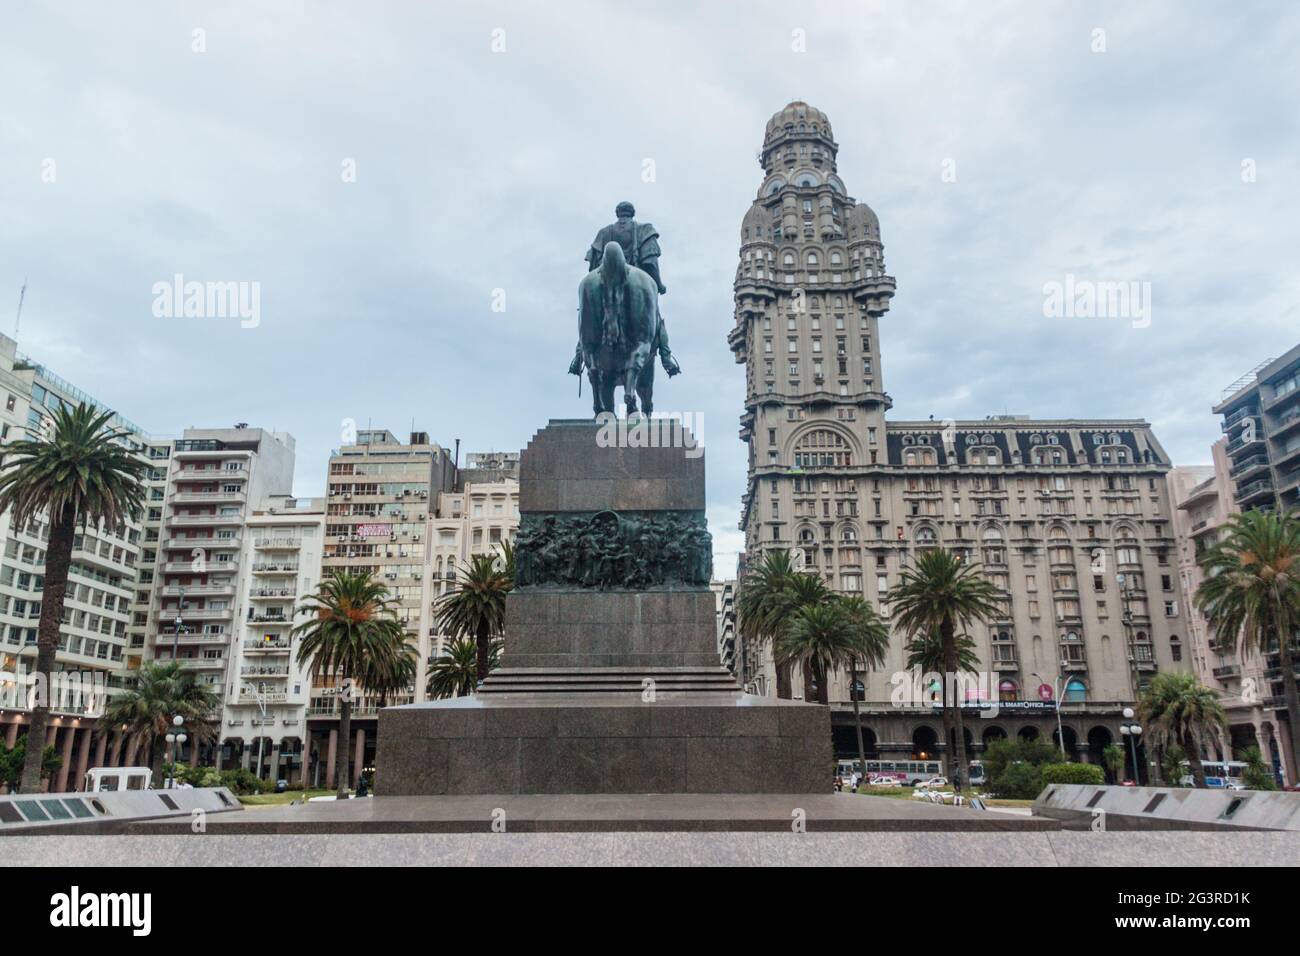 MONTEVIDEO, URUGUAY - FEB 18, 2015: View of Palacio Salva building and Artigas mausoleum at Plaza Independecia square in the center of Montevideo. Stock Photo